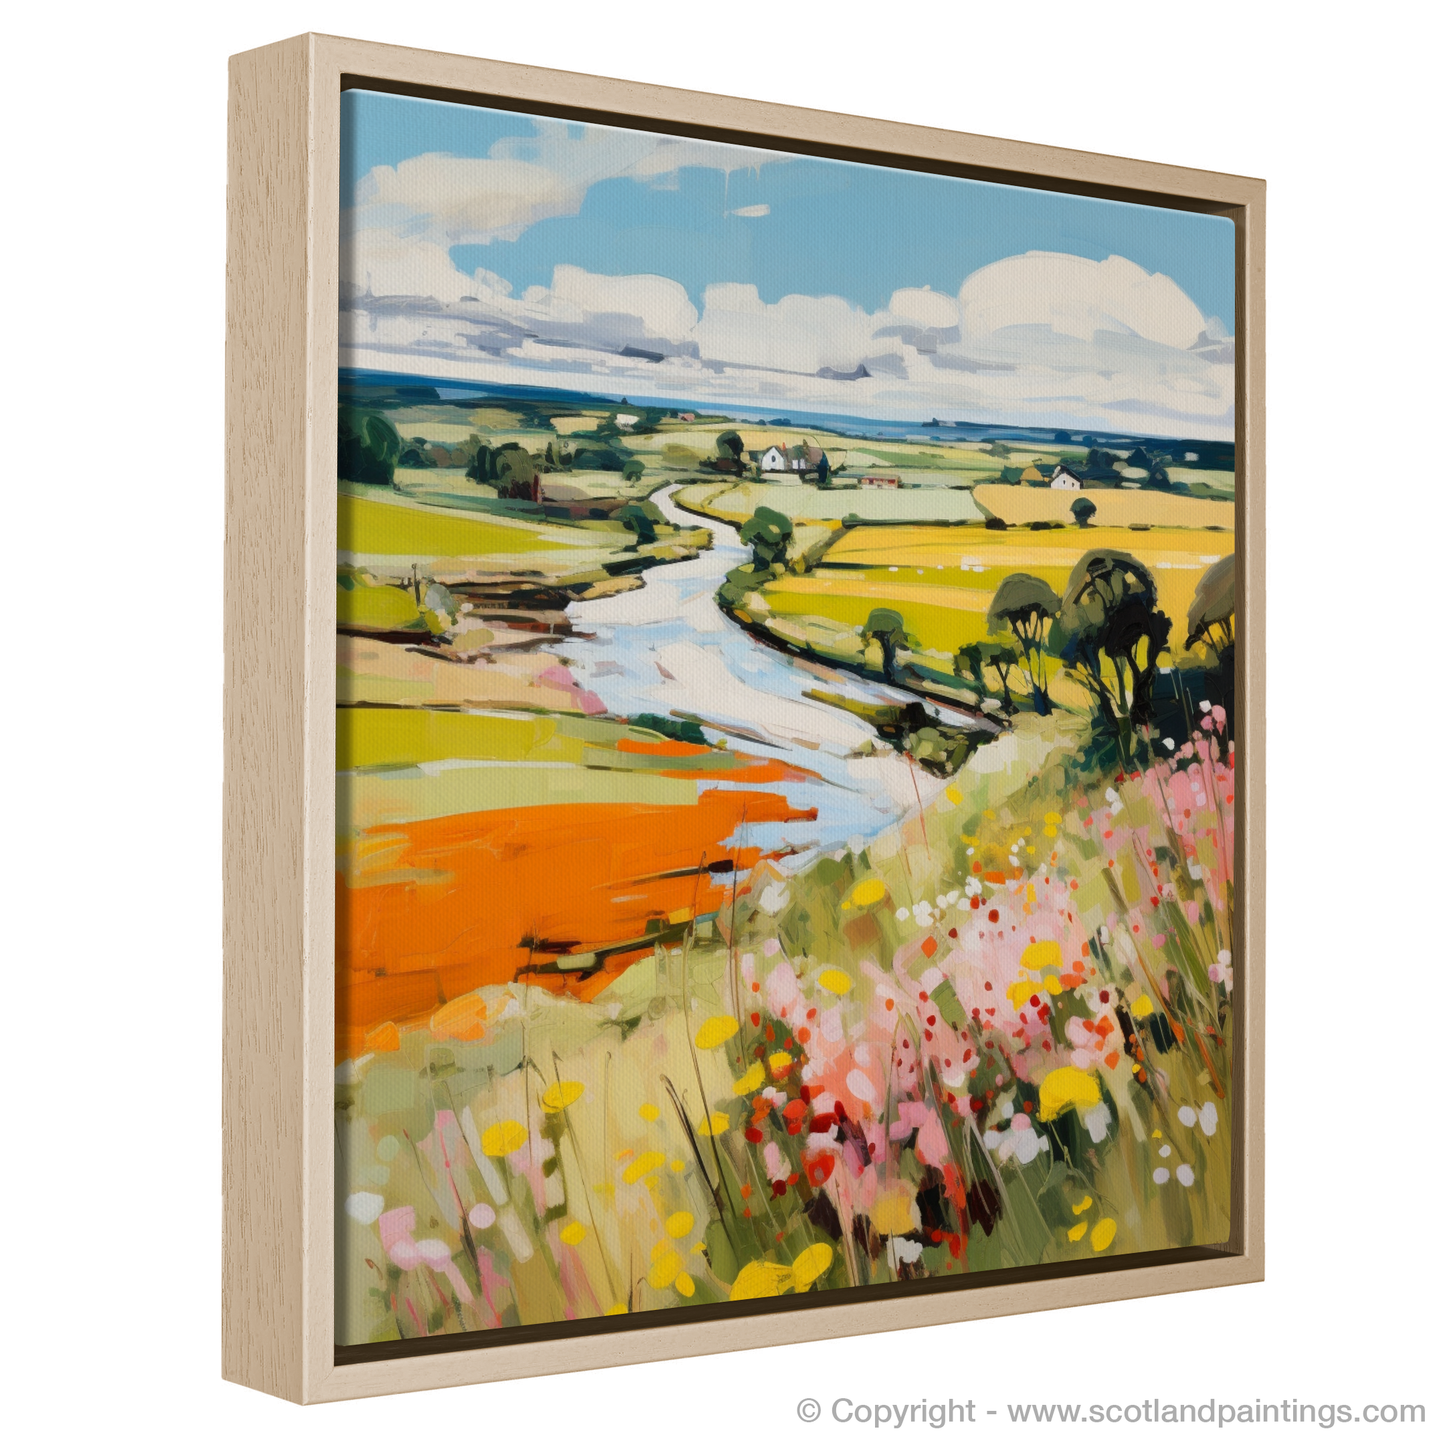 Painting and Art Print of Glenesk, Angus in summer entitled "Summer Abstraction: Glenesk's Vibrant Vistas".